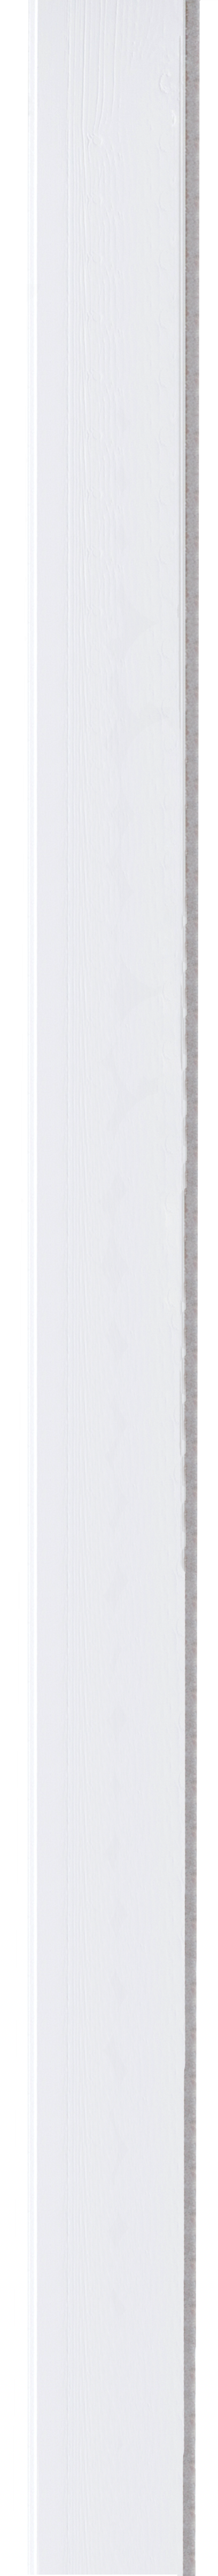 Huntonit-Wood-Panelbord-Hvit.png